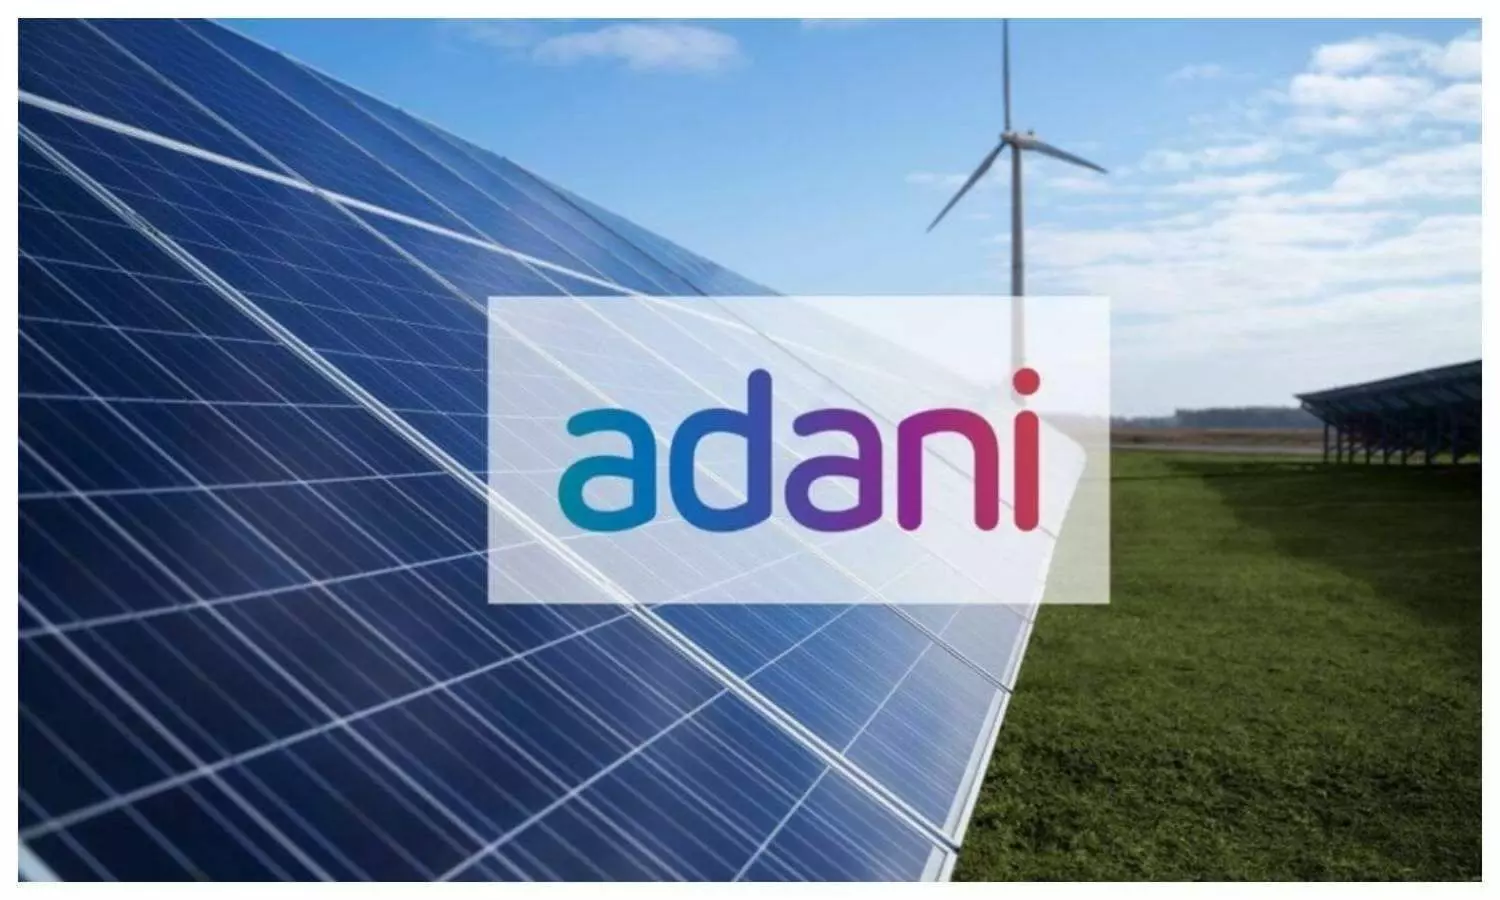 Adani Green Energy Limited